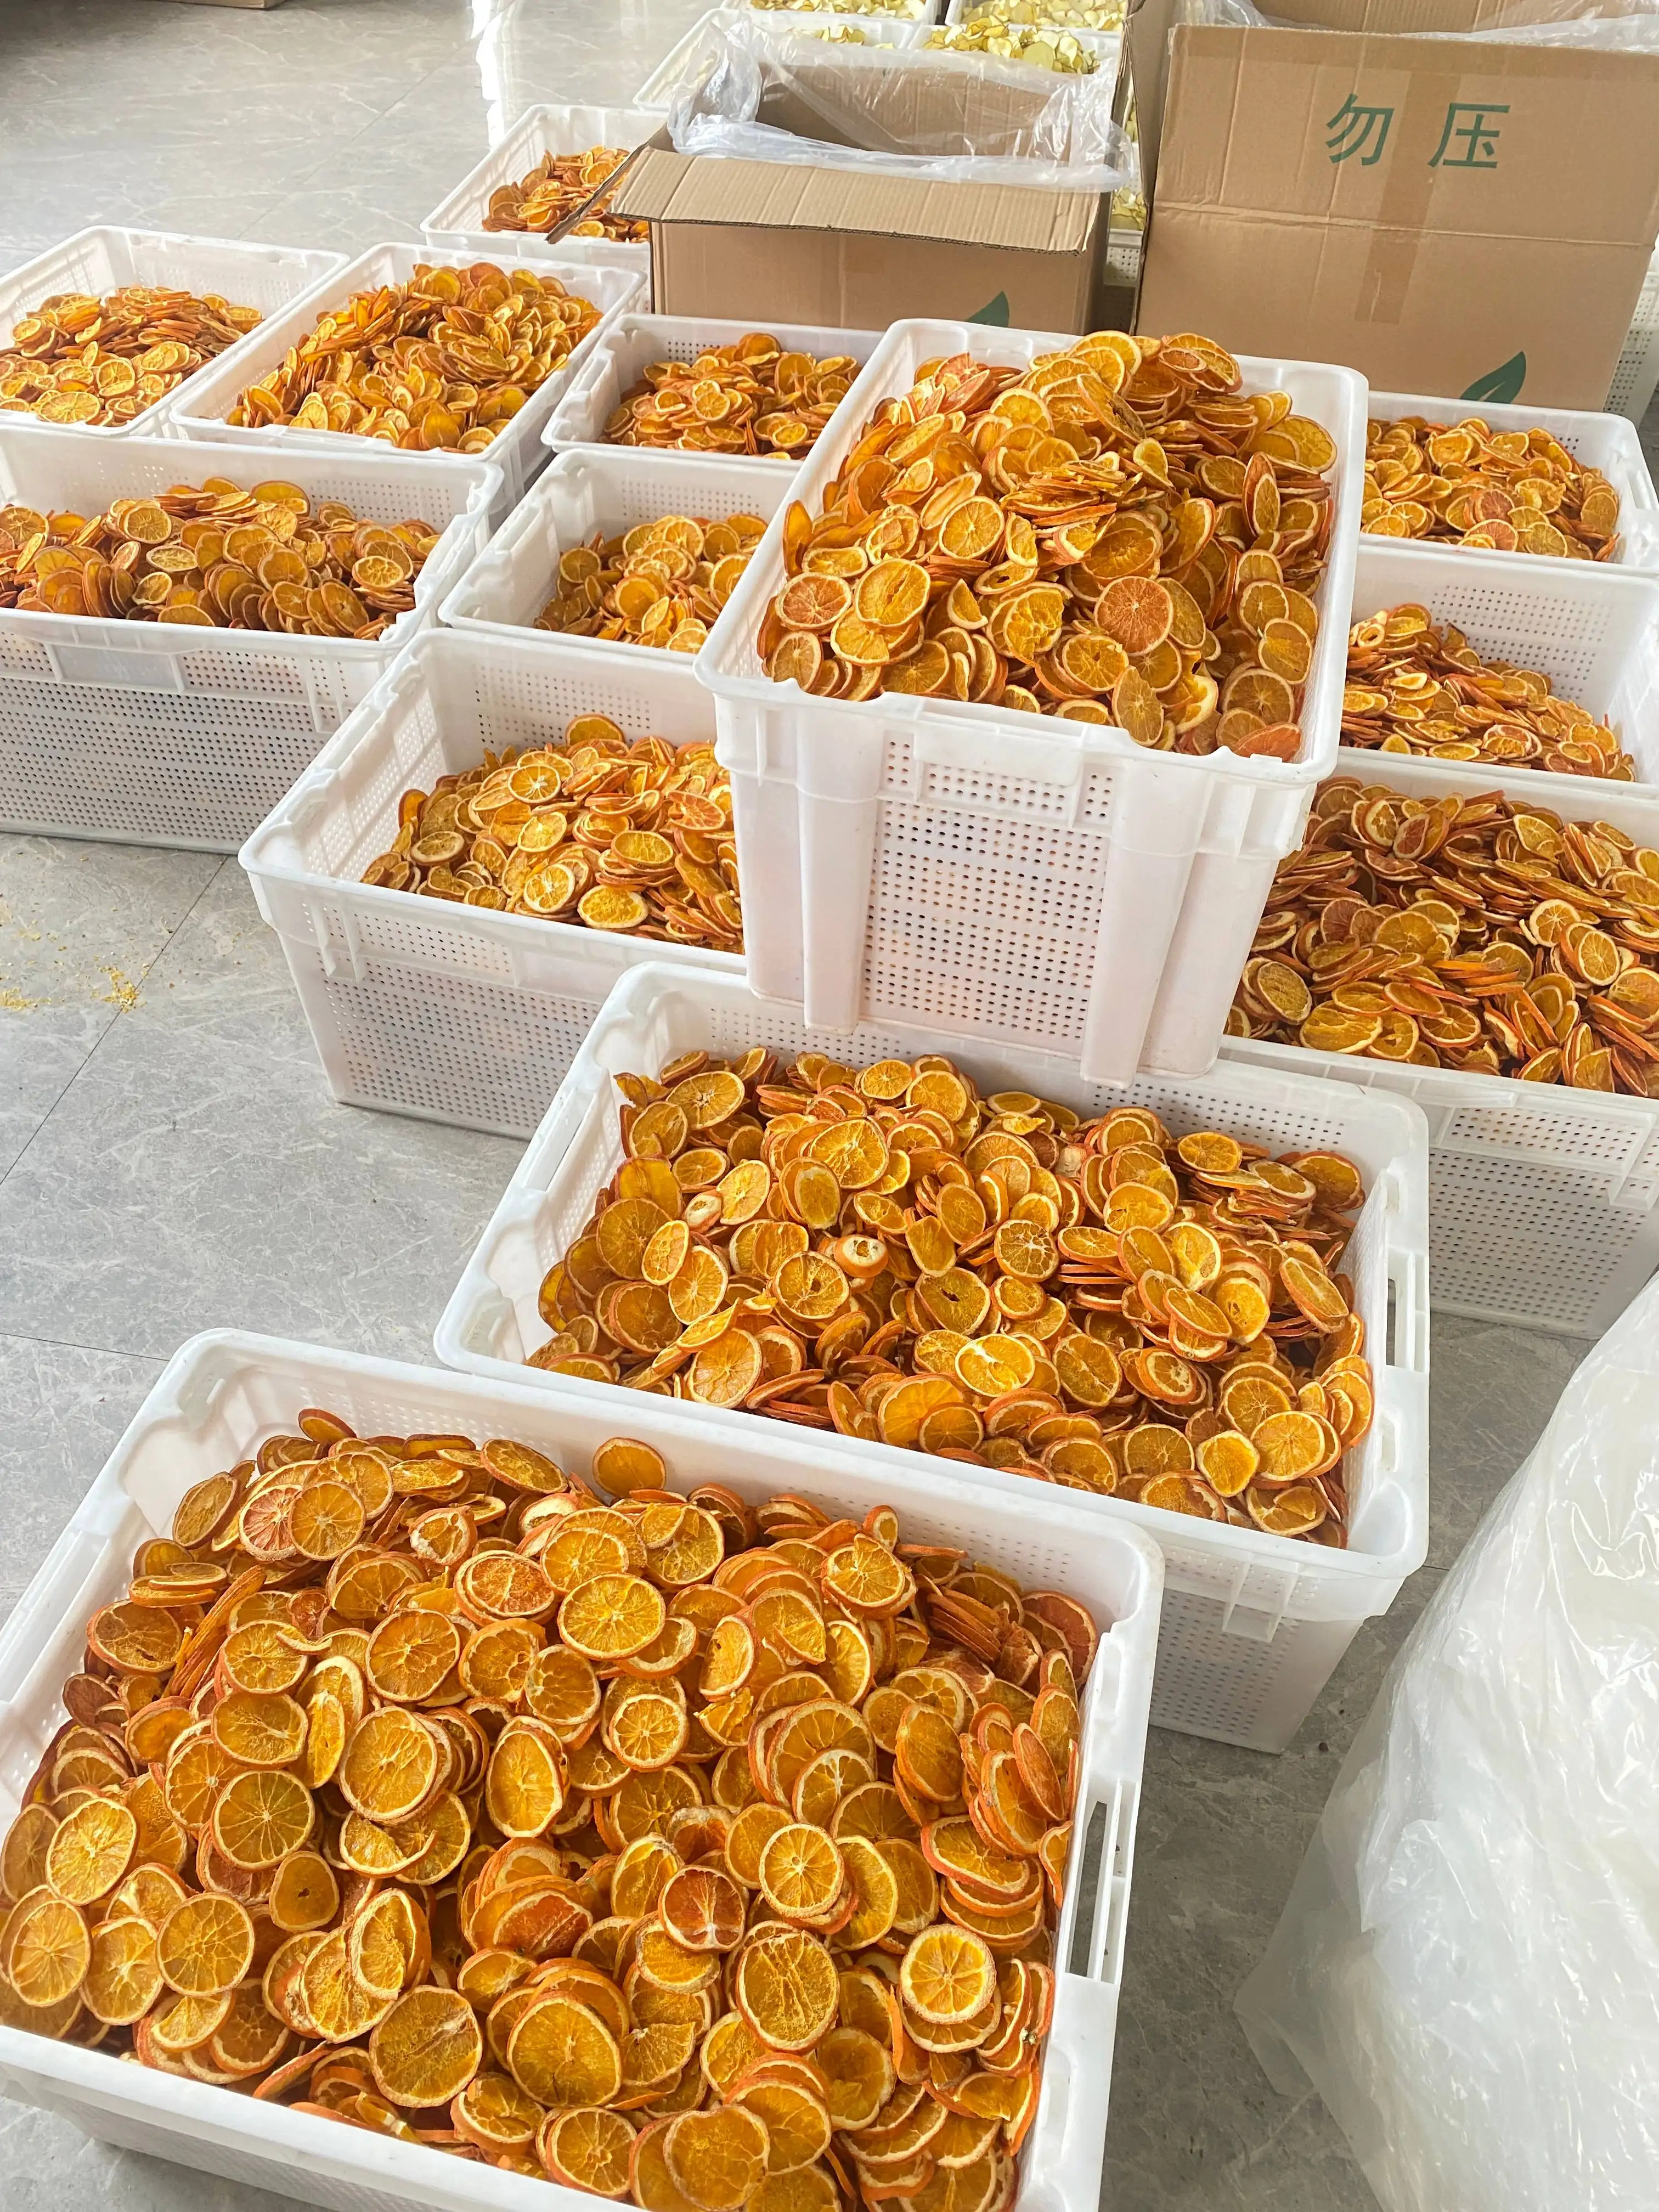 Fornitura di fabbrica di frutta secca rotonda completa di alta qualità di origine cinese fette di arancia essiccate all'ingrosso a basso costo per bere il tè